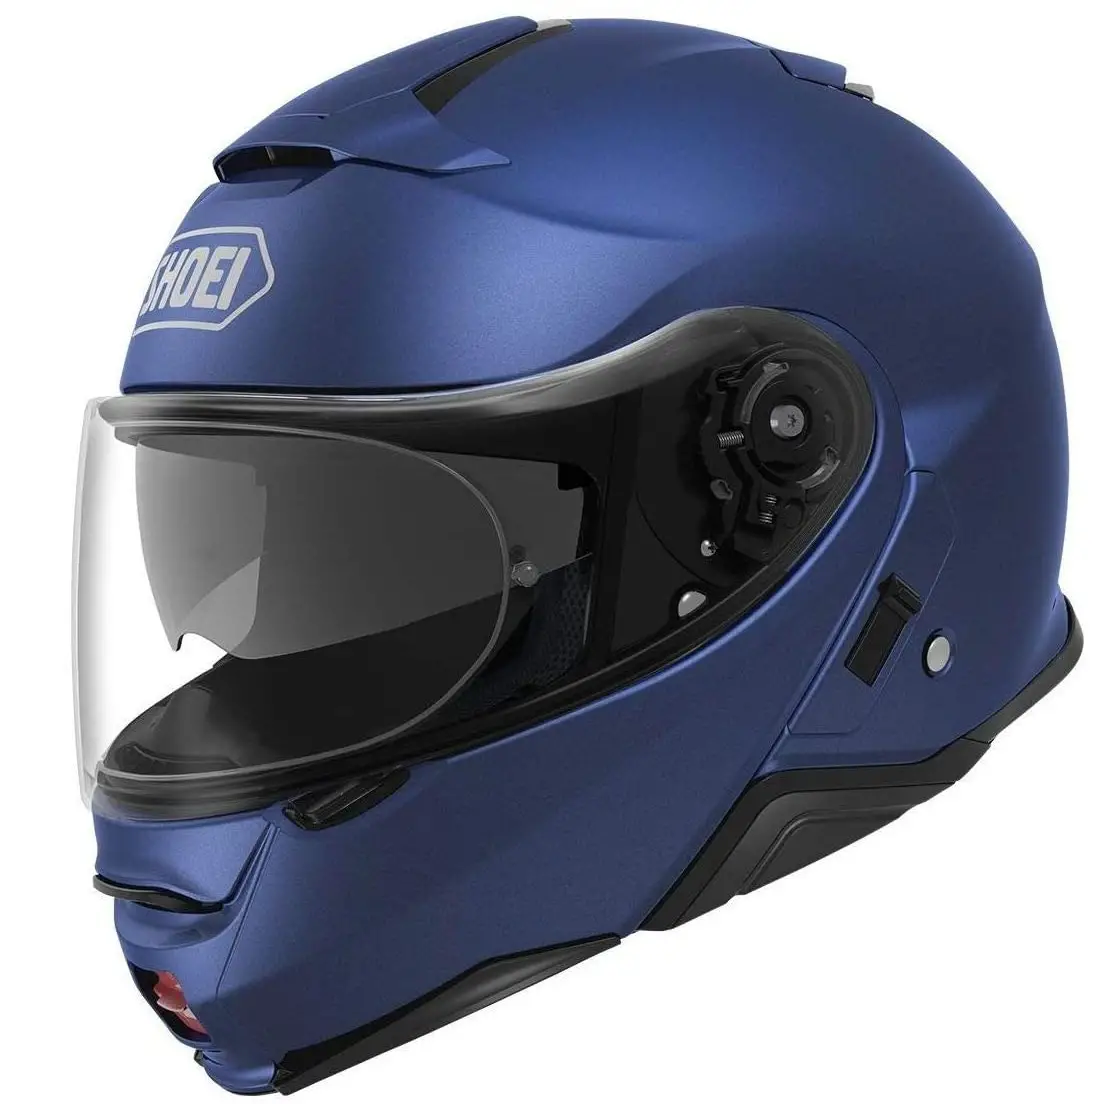 Top 5 Best Ventilated Motorcycle Helmets [2021 Review] - HelmetsGuide